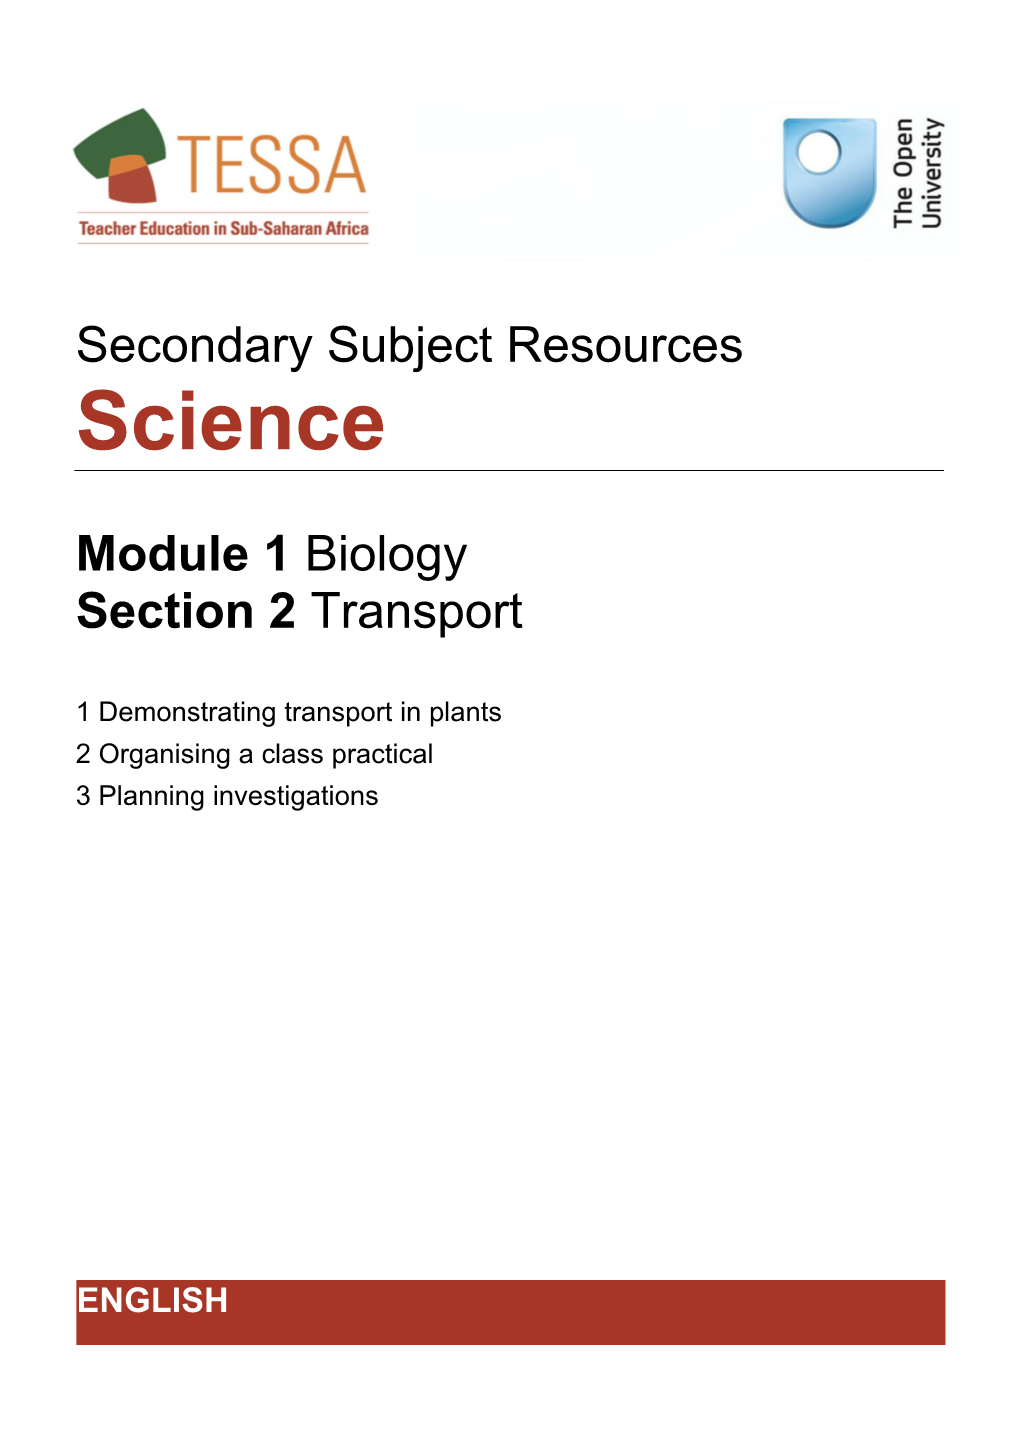 Module 1 Biology Section 2 Transport